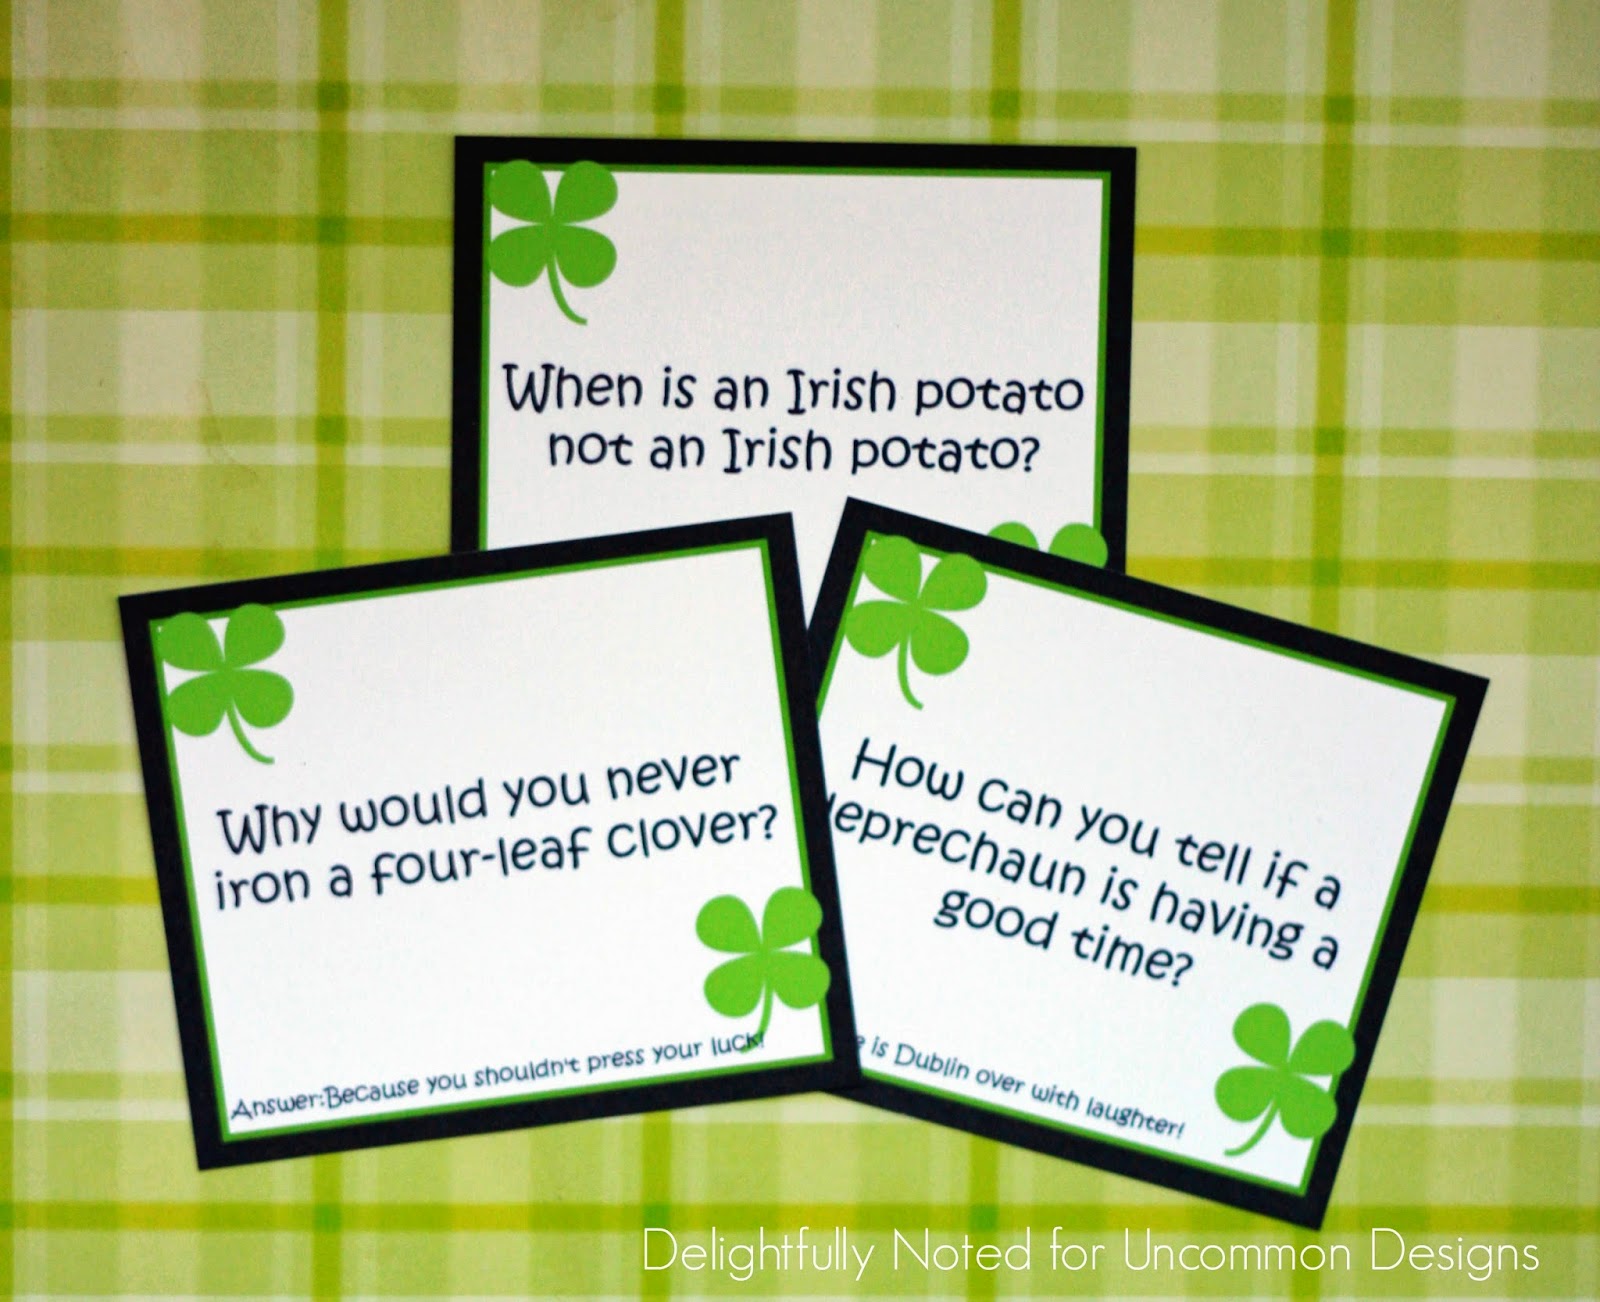 Free Printable Lunch Box Jokes for St. Patrick's Day www.uncommondesignsonline.com